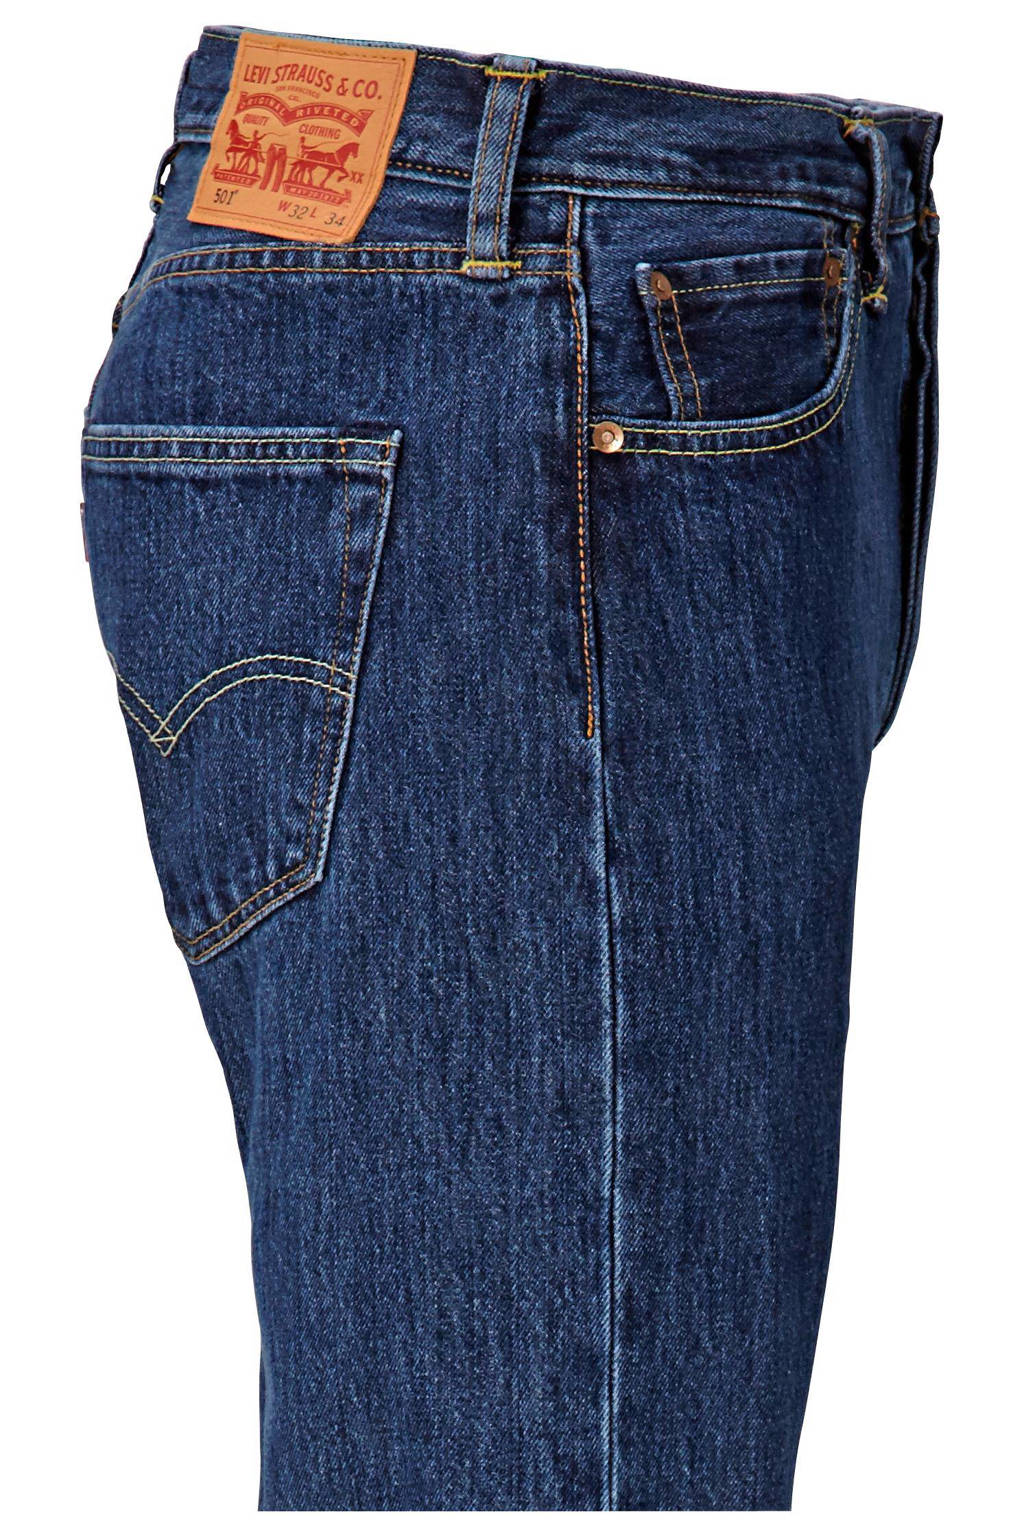 Levi's 501 jeans stone wash |